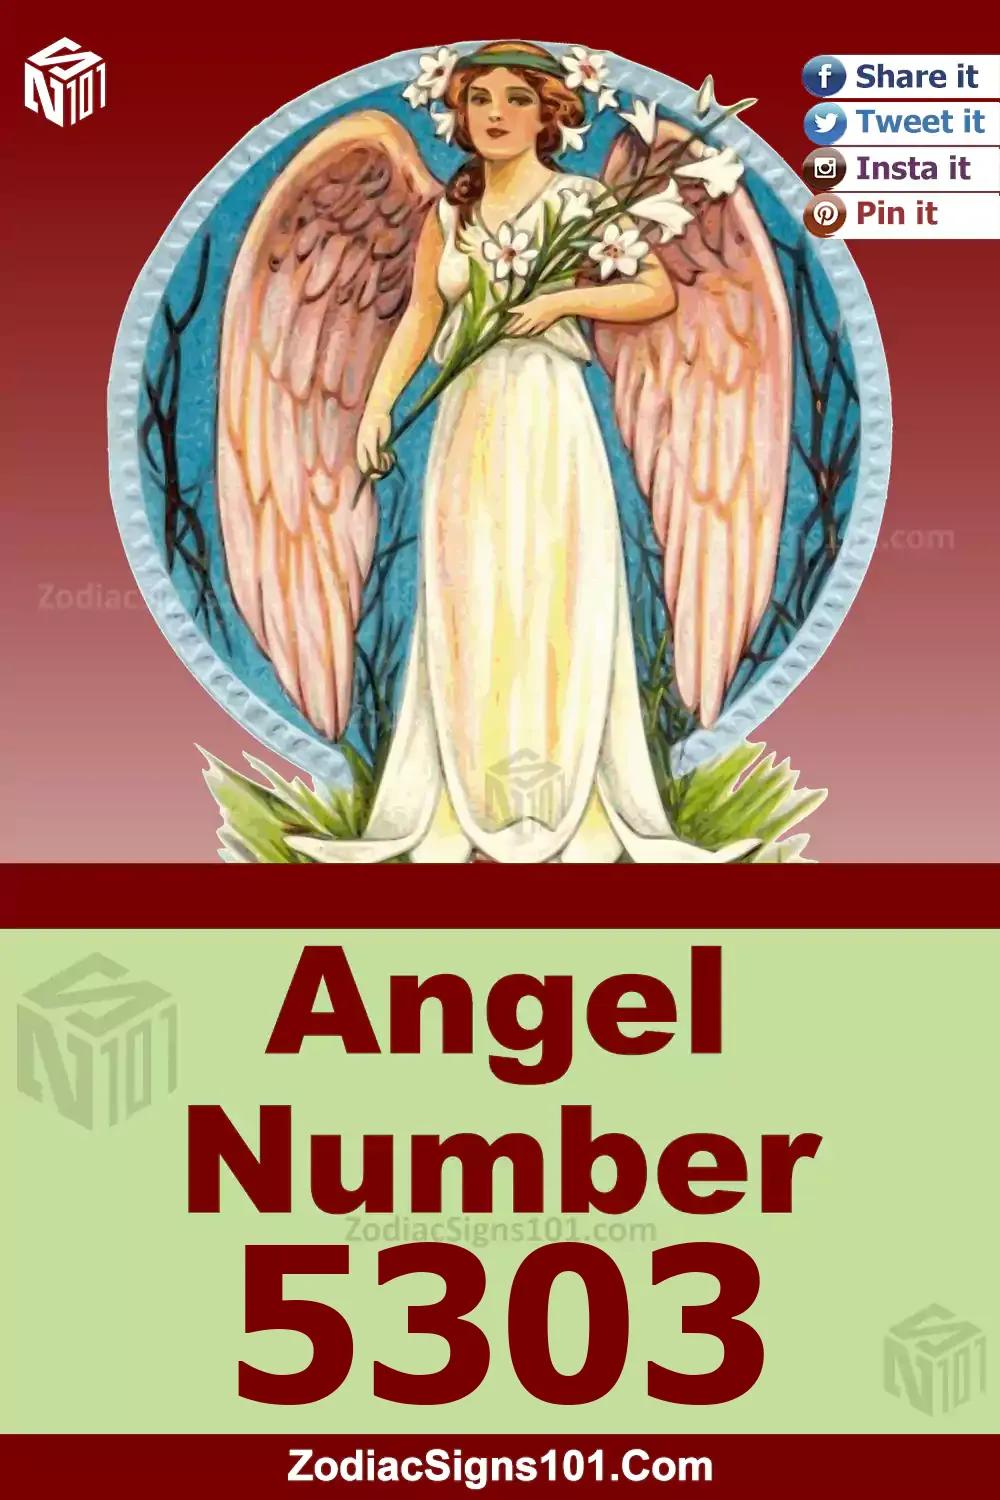 5303-Angel-Number-Meaning.jpg